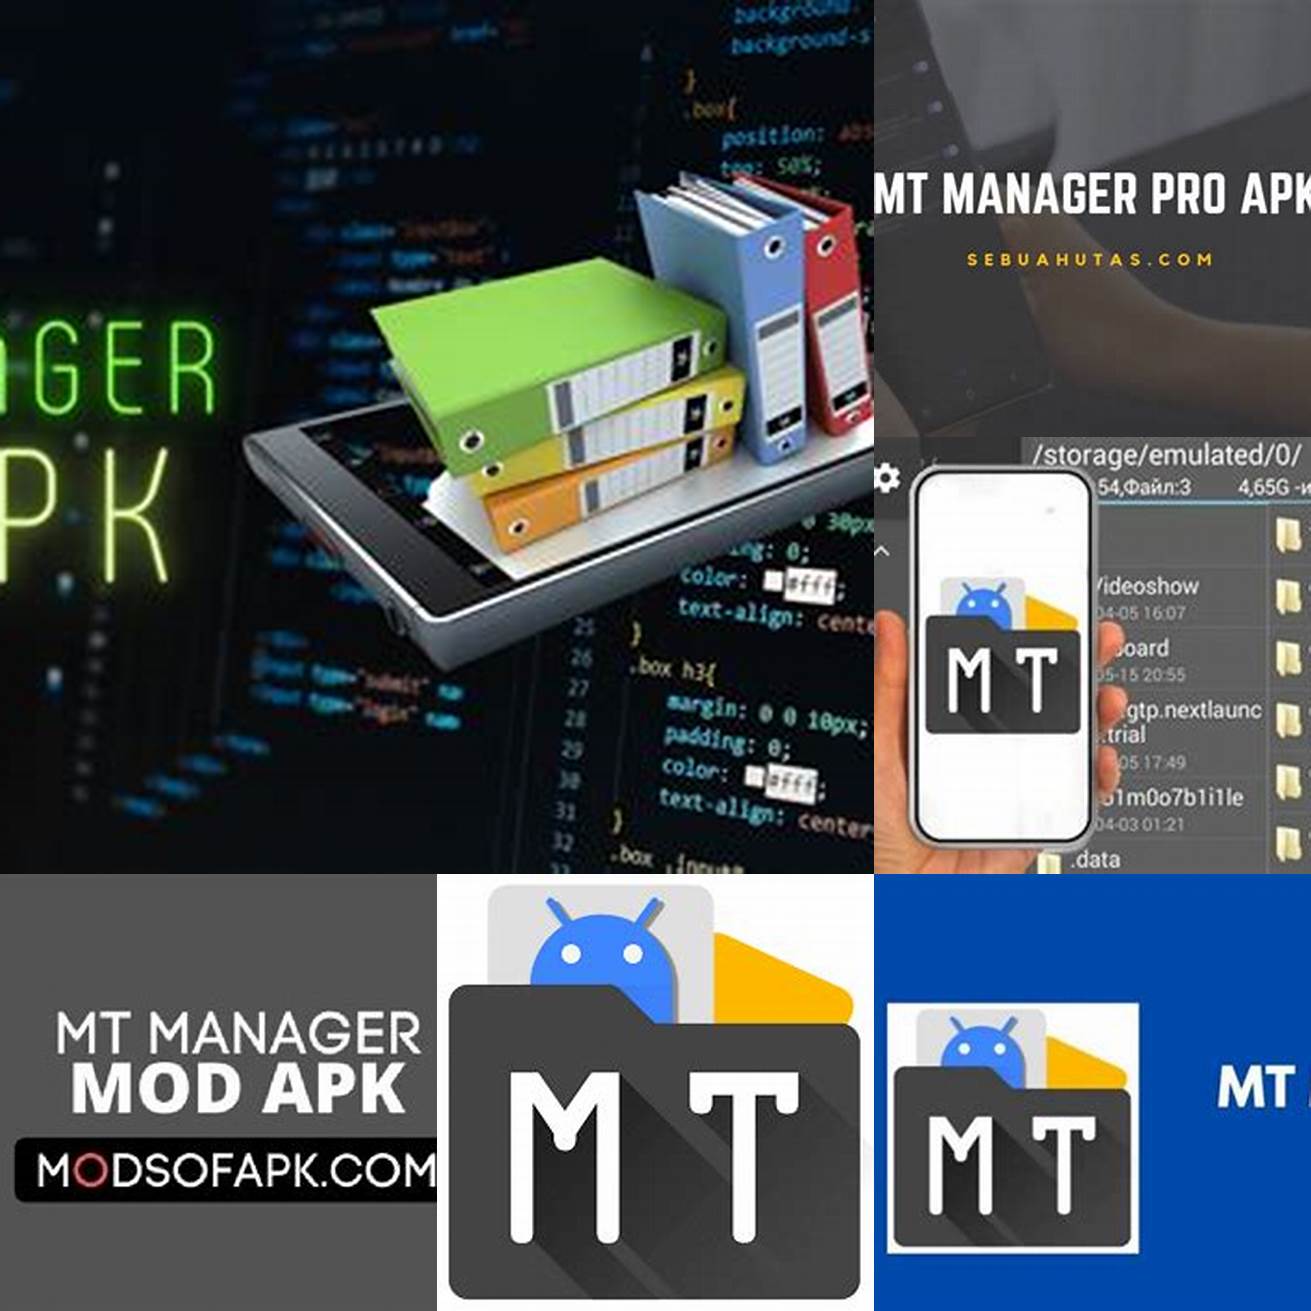 Integrasi dengan aplikasi cloud MT Manager APK dapat diintegrasikan dengan berbagai layanan cloud seperti Google Drive Dropbox dan lain-lain